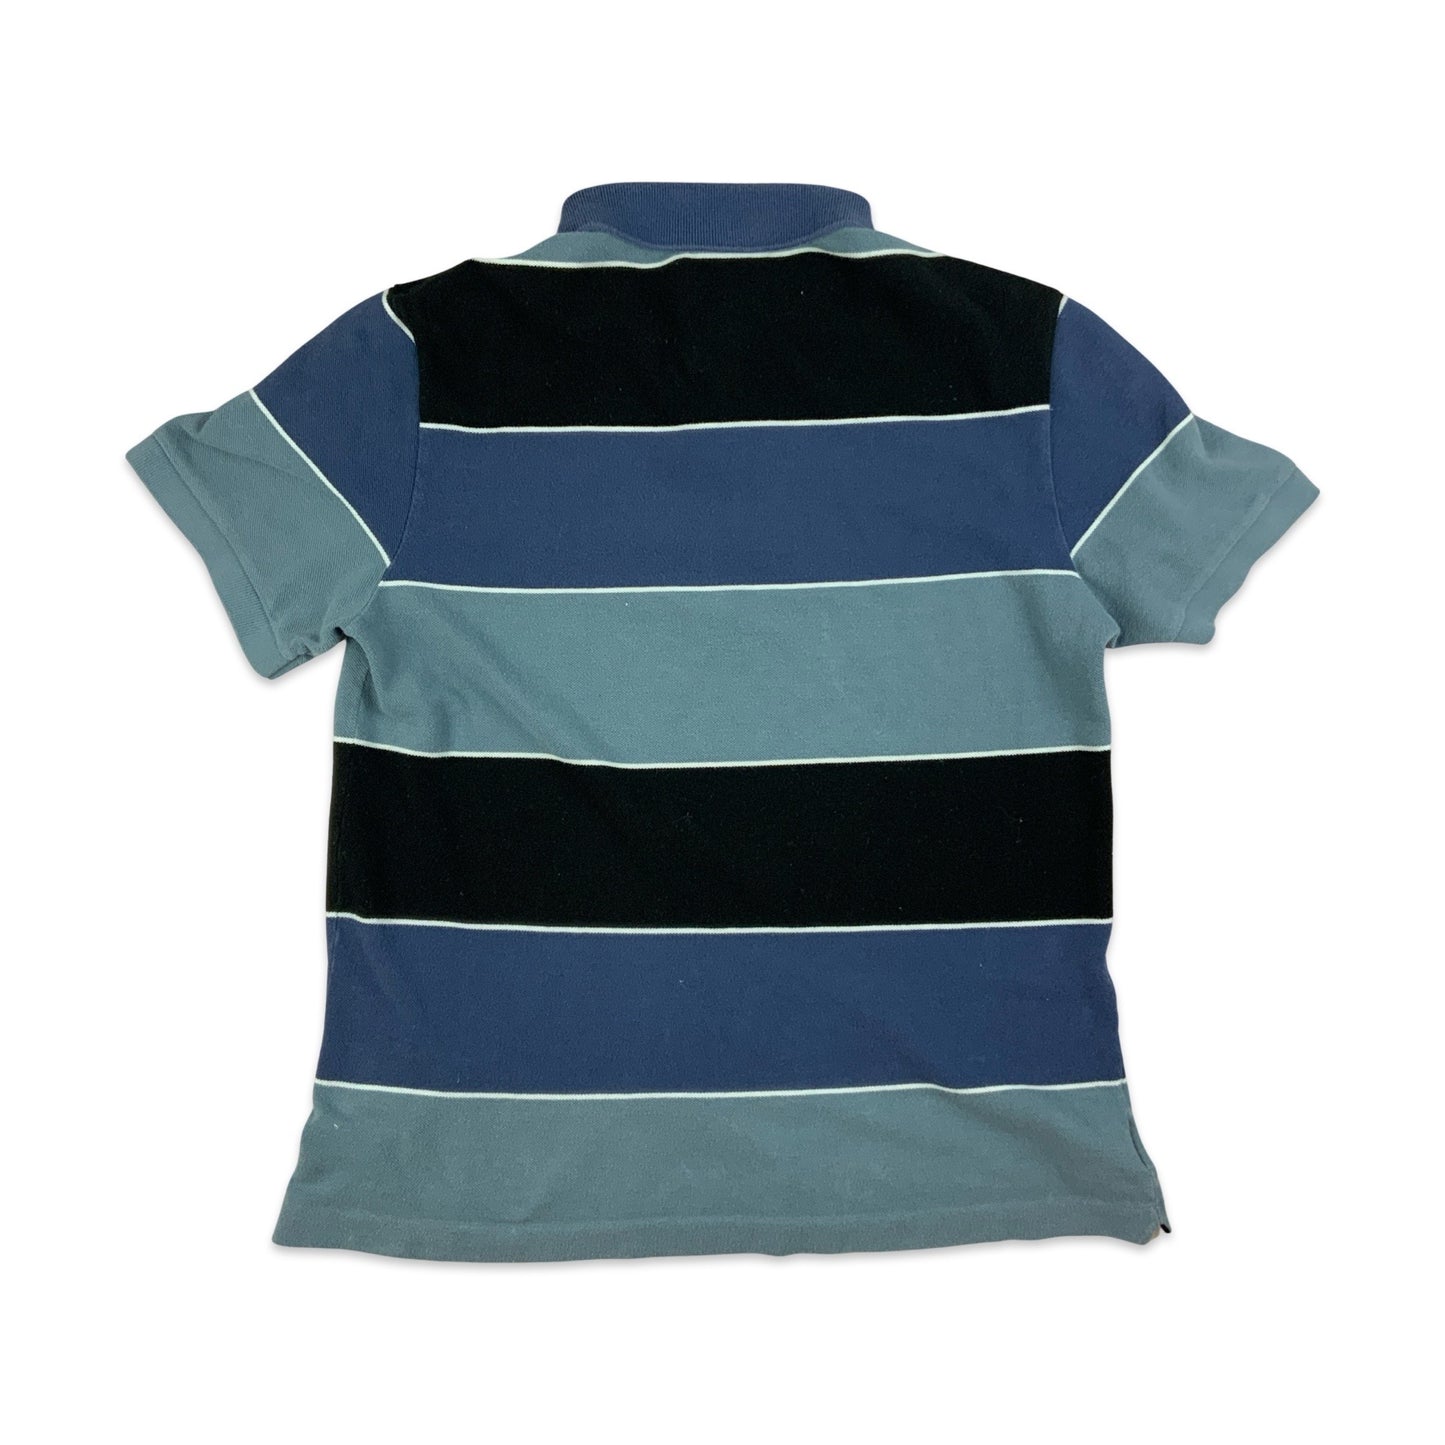 Lacoste Blue Striped Polo Shirt XS S